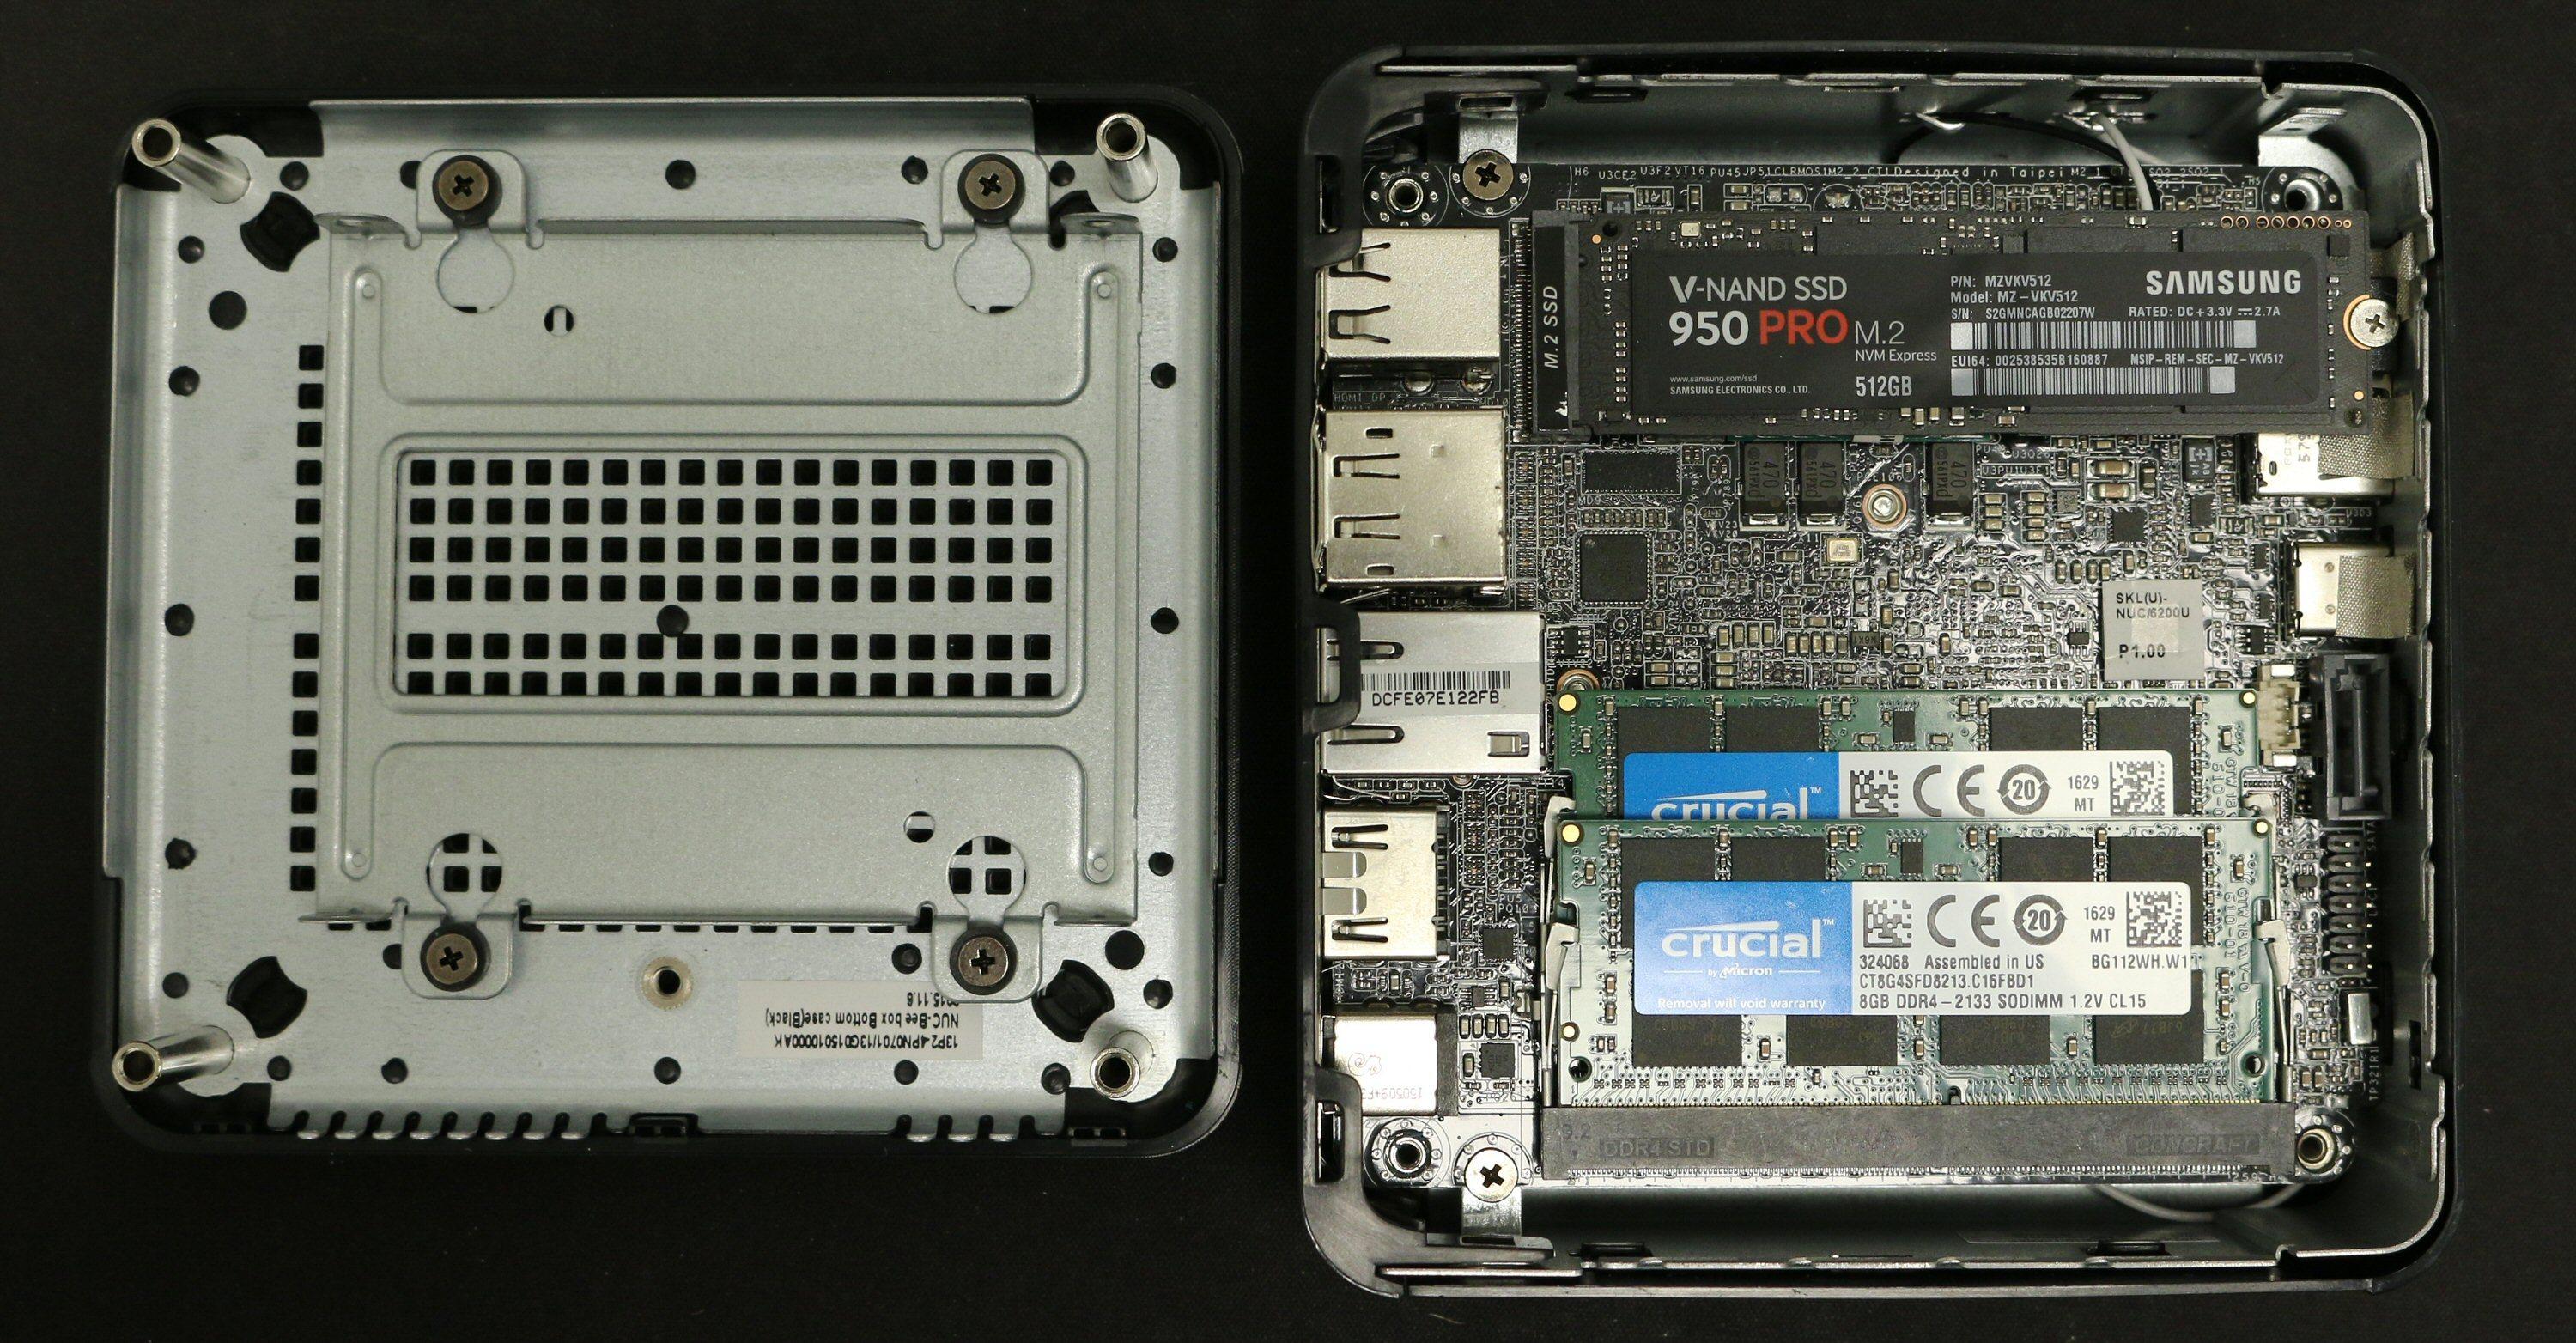 ASRock Beebox-S med RAM-moduler og en M.2-SSD (2280) på plass.